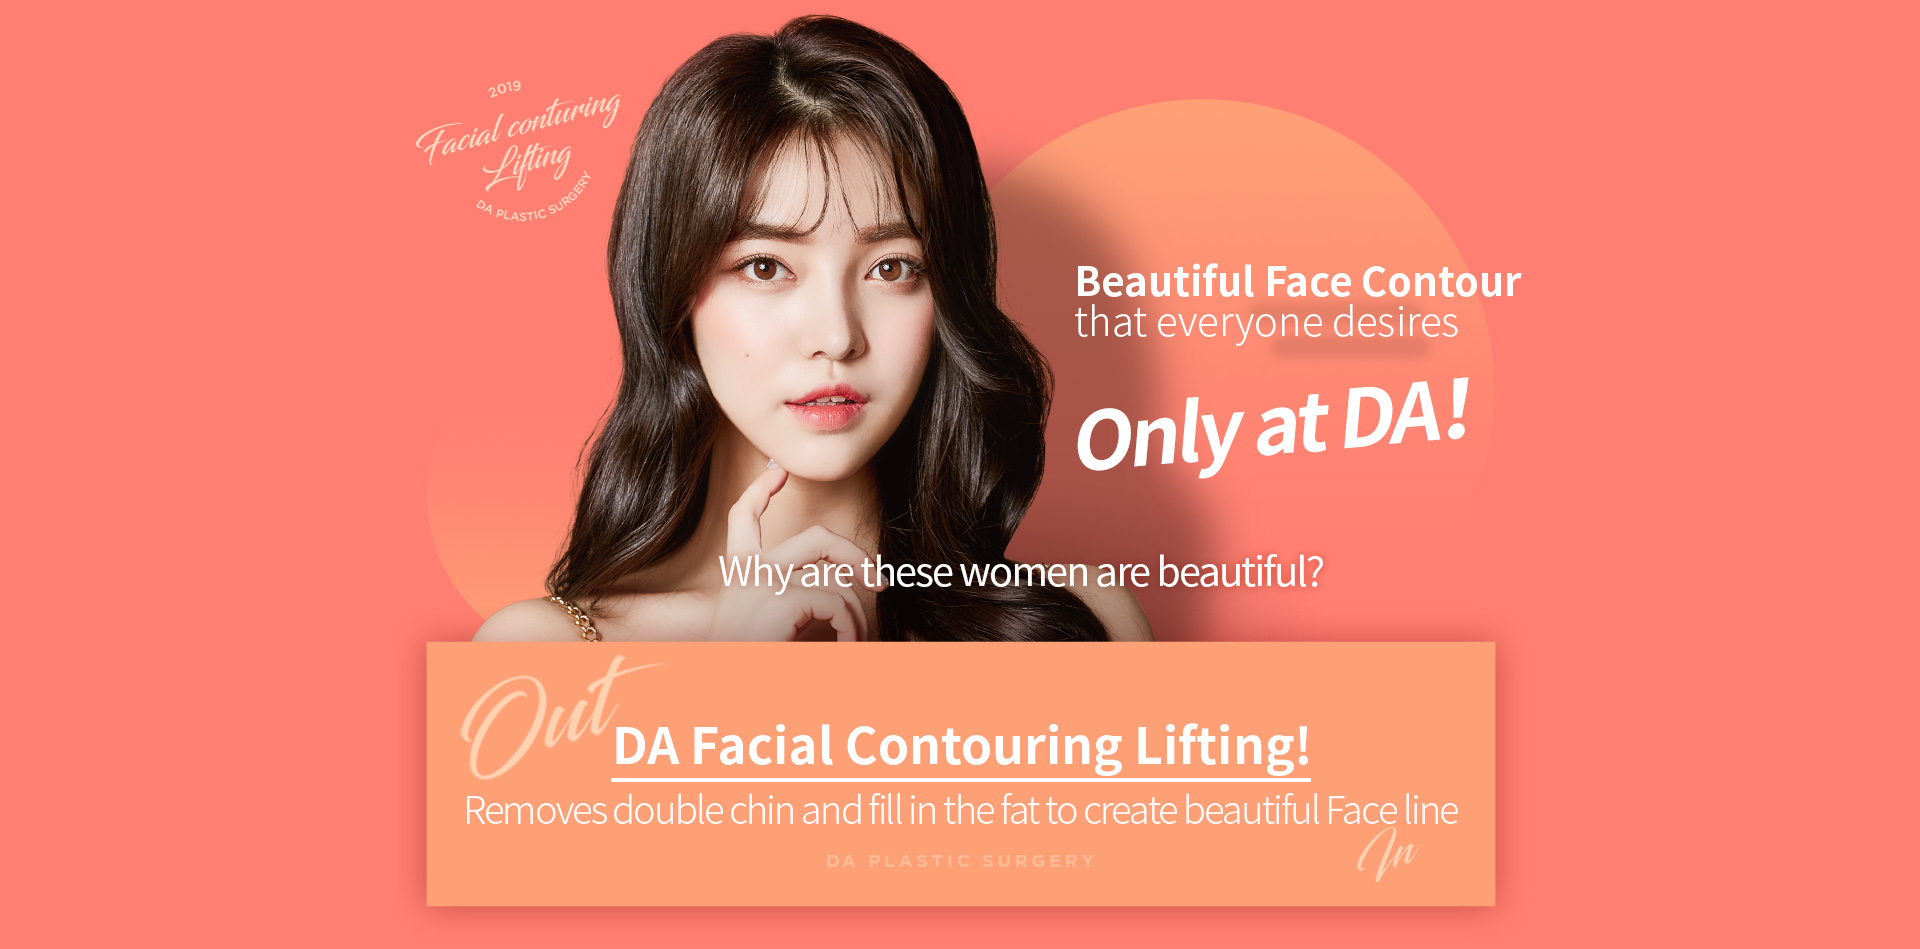 DA Facial contouring lifting